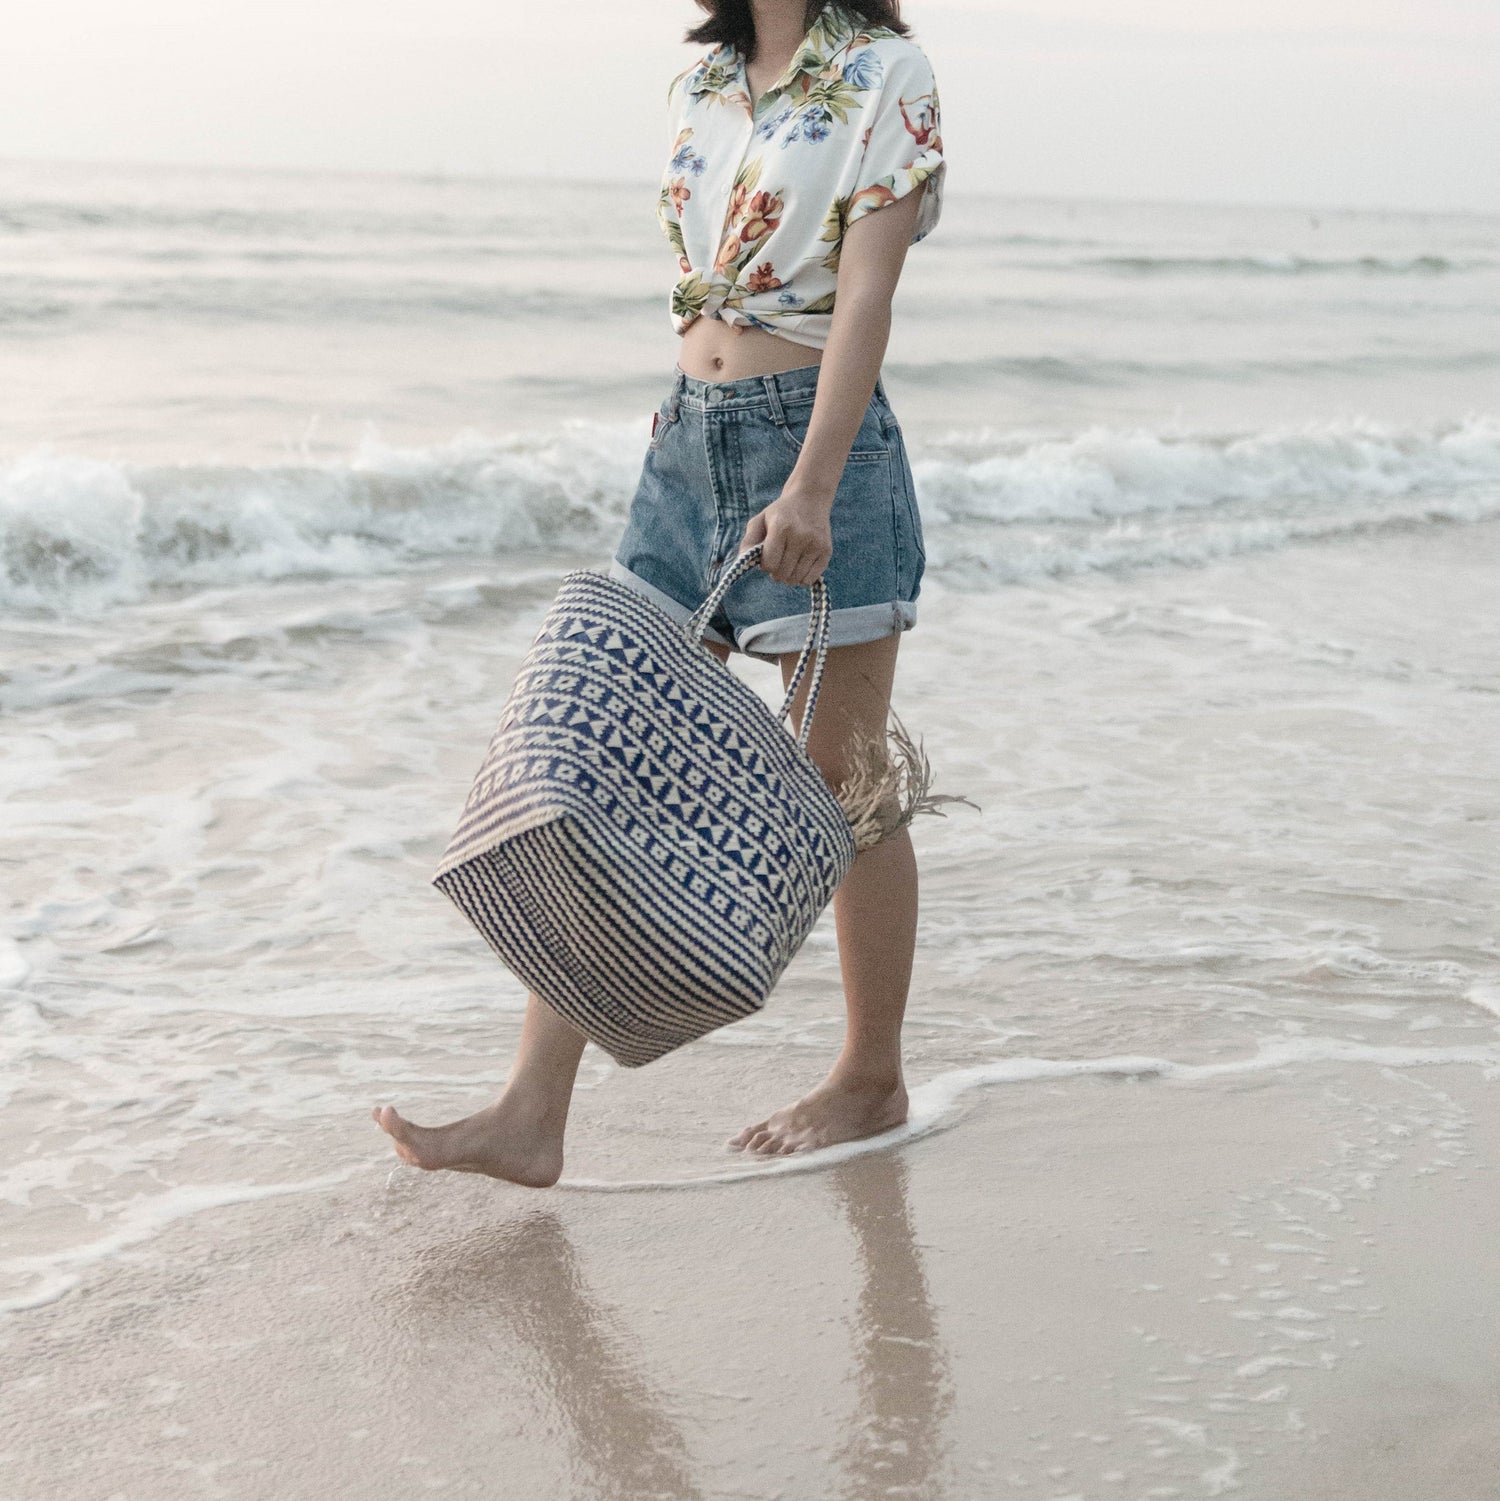 Blue Shopping Bag | Beach Bag | Tote Bag KIDUL made of Rattan